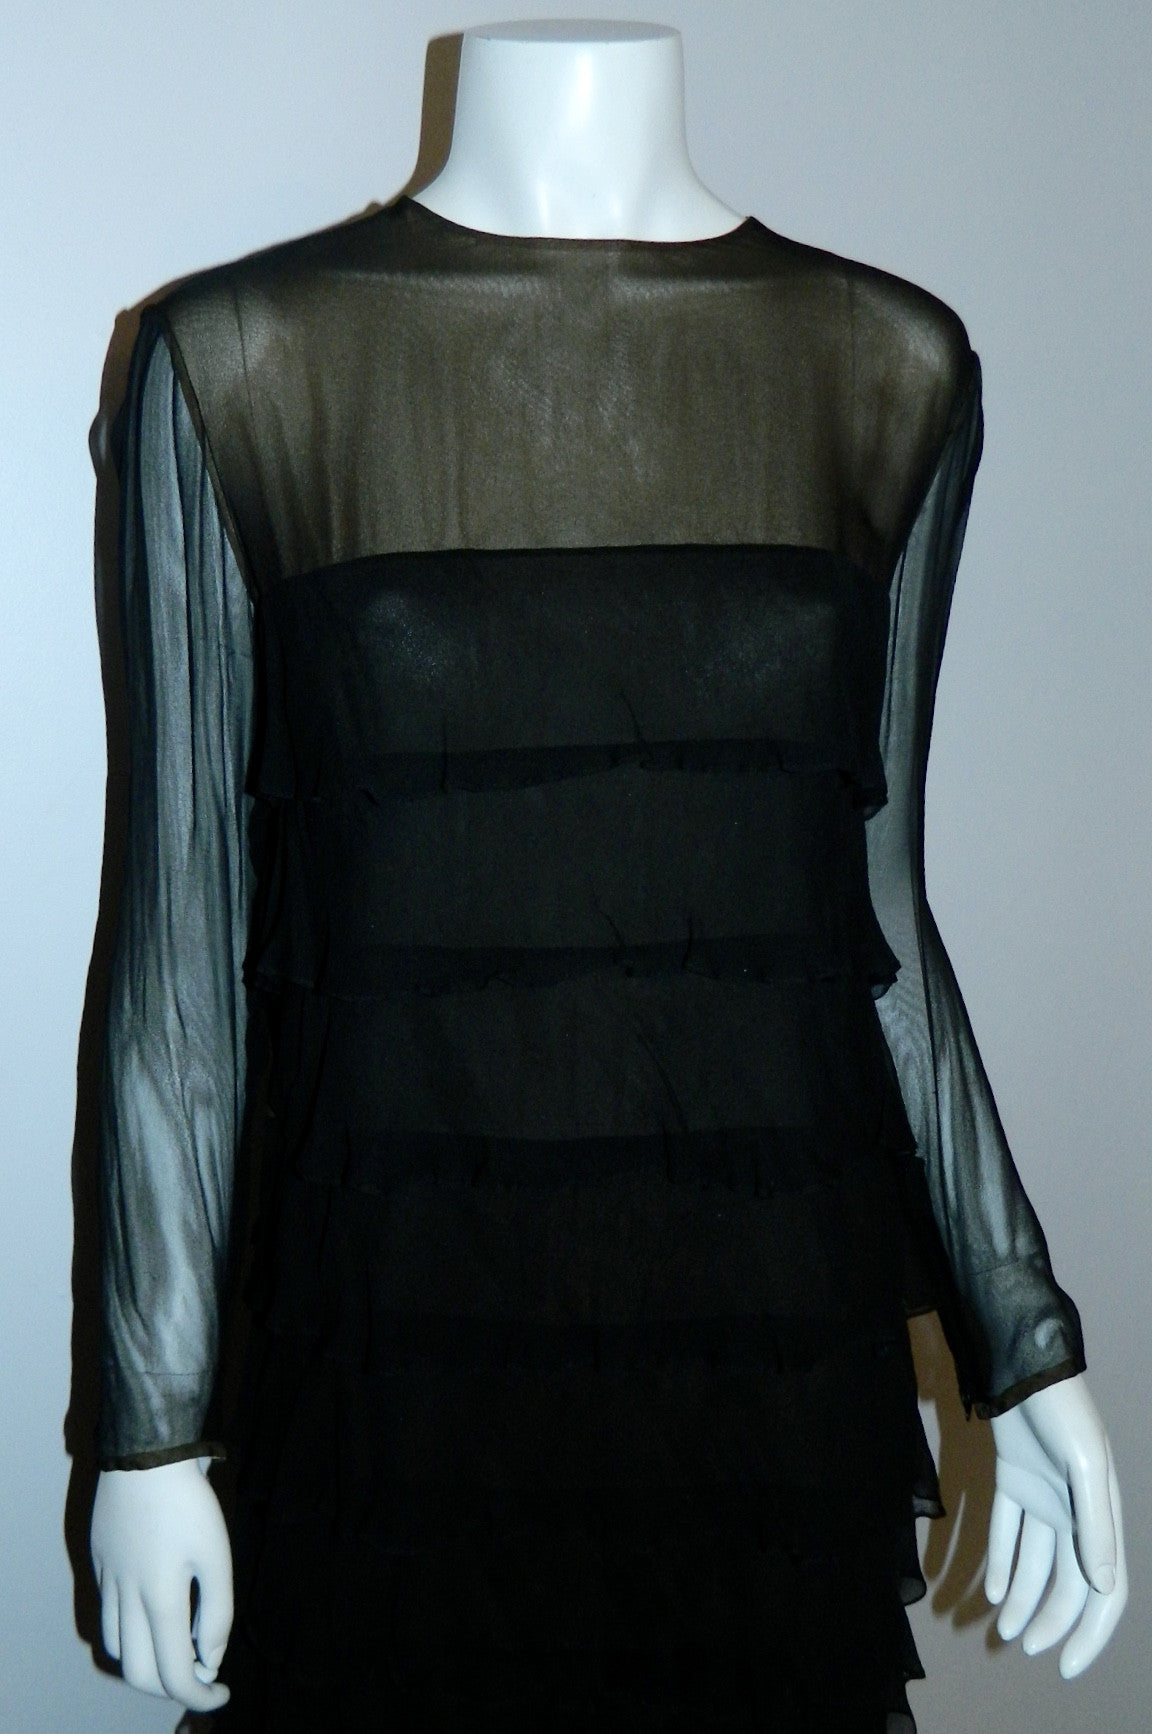 vintage 1960s Pauline Trigere black dress - silk chiffon nude illusion tiered ruffle cocktail frock S